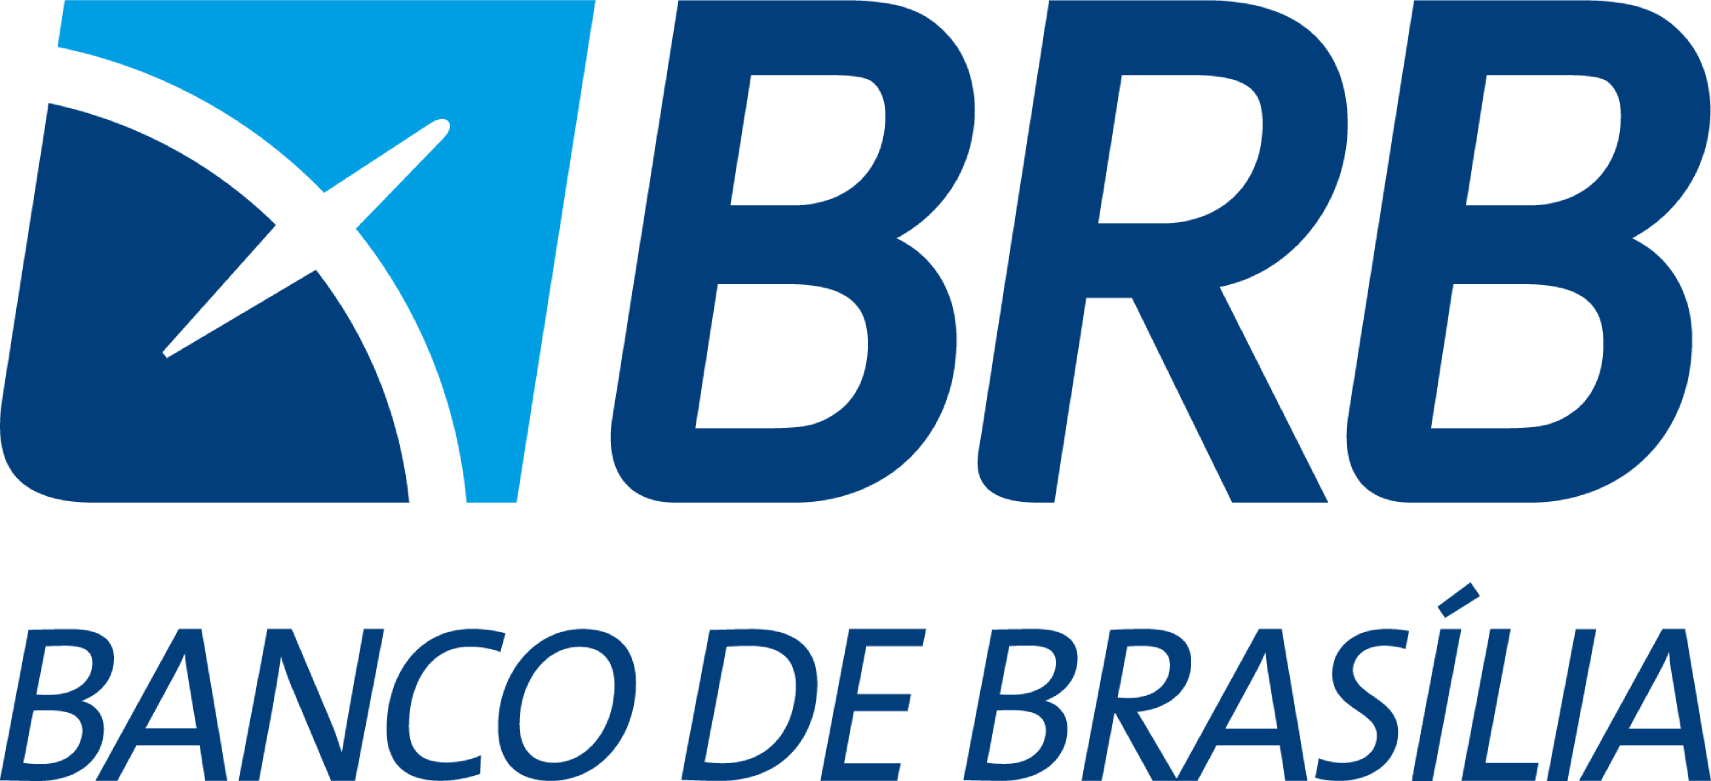 Banco de Brasília logo large (transparent PNG)